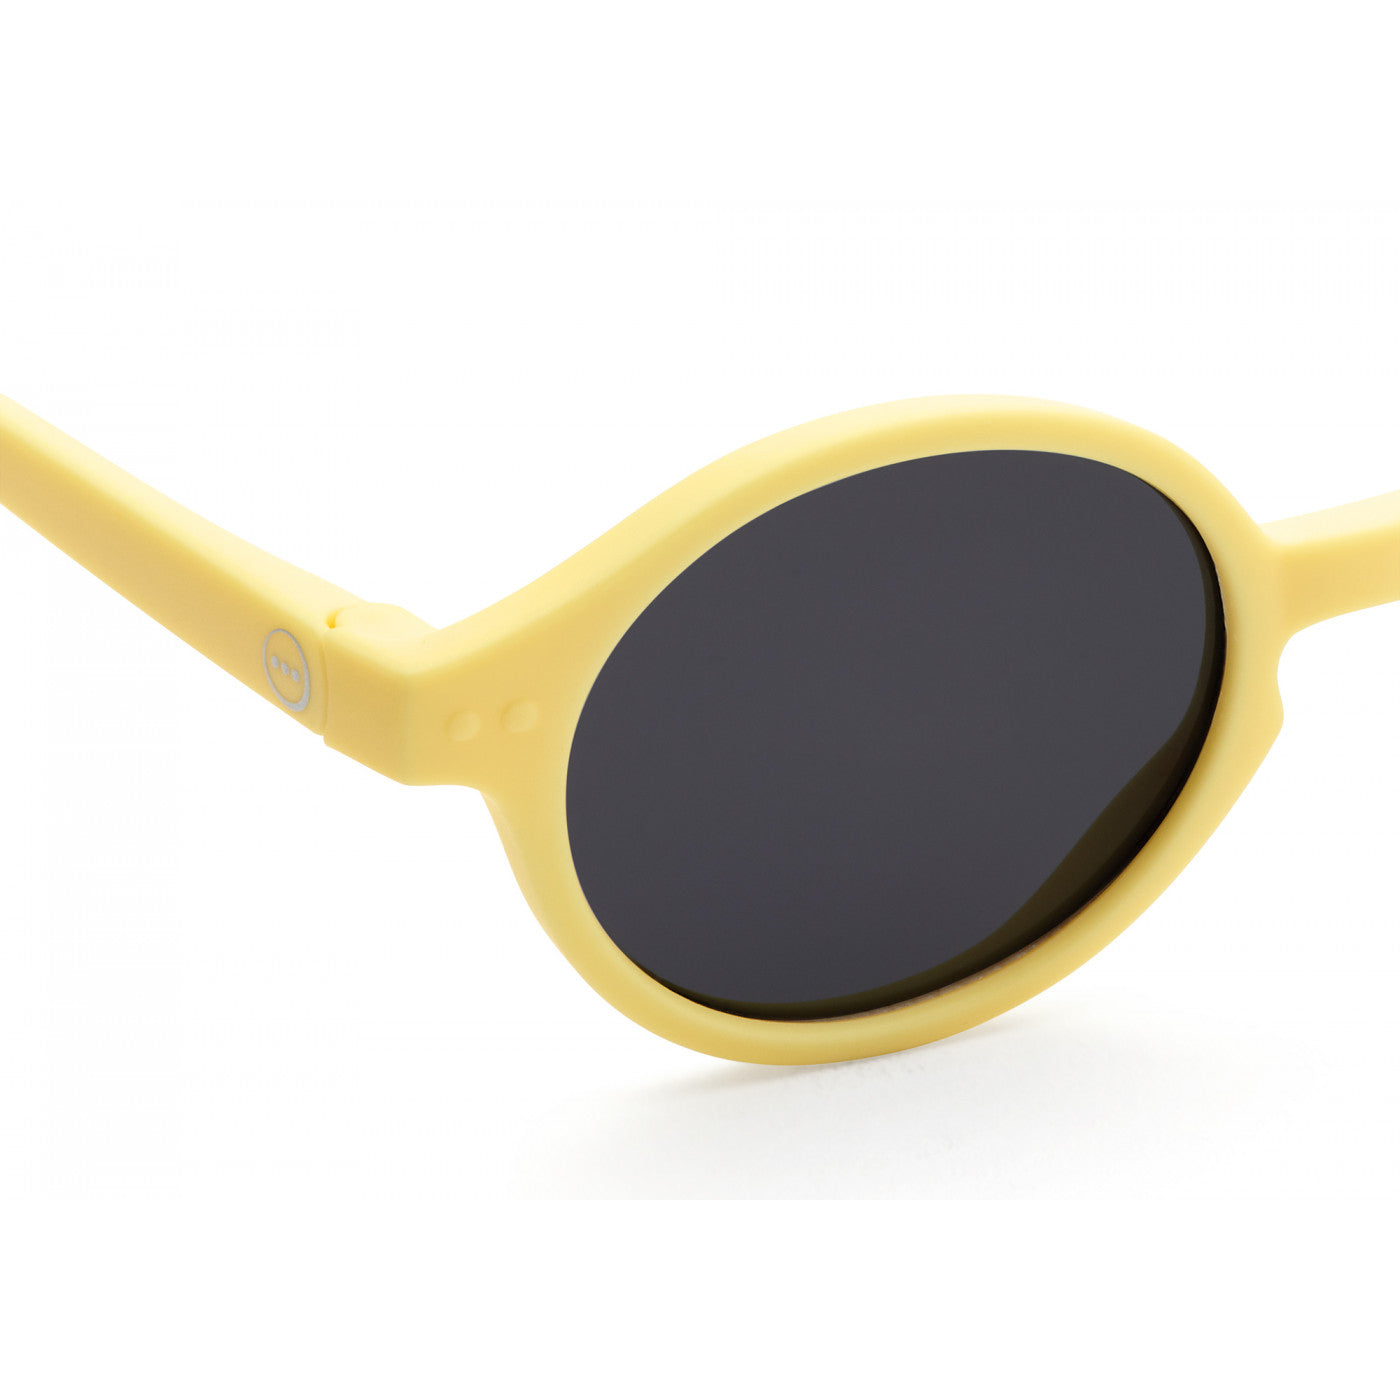 Baby Sunglasses - Lemonaid Frame (9 - 36 months)